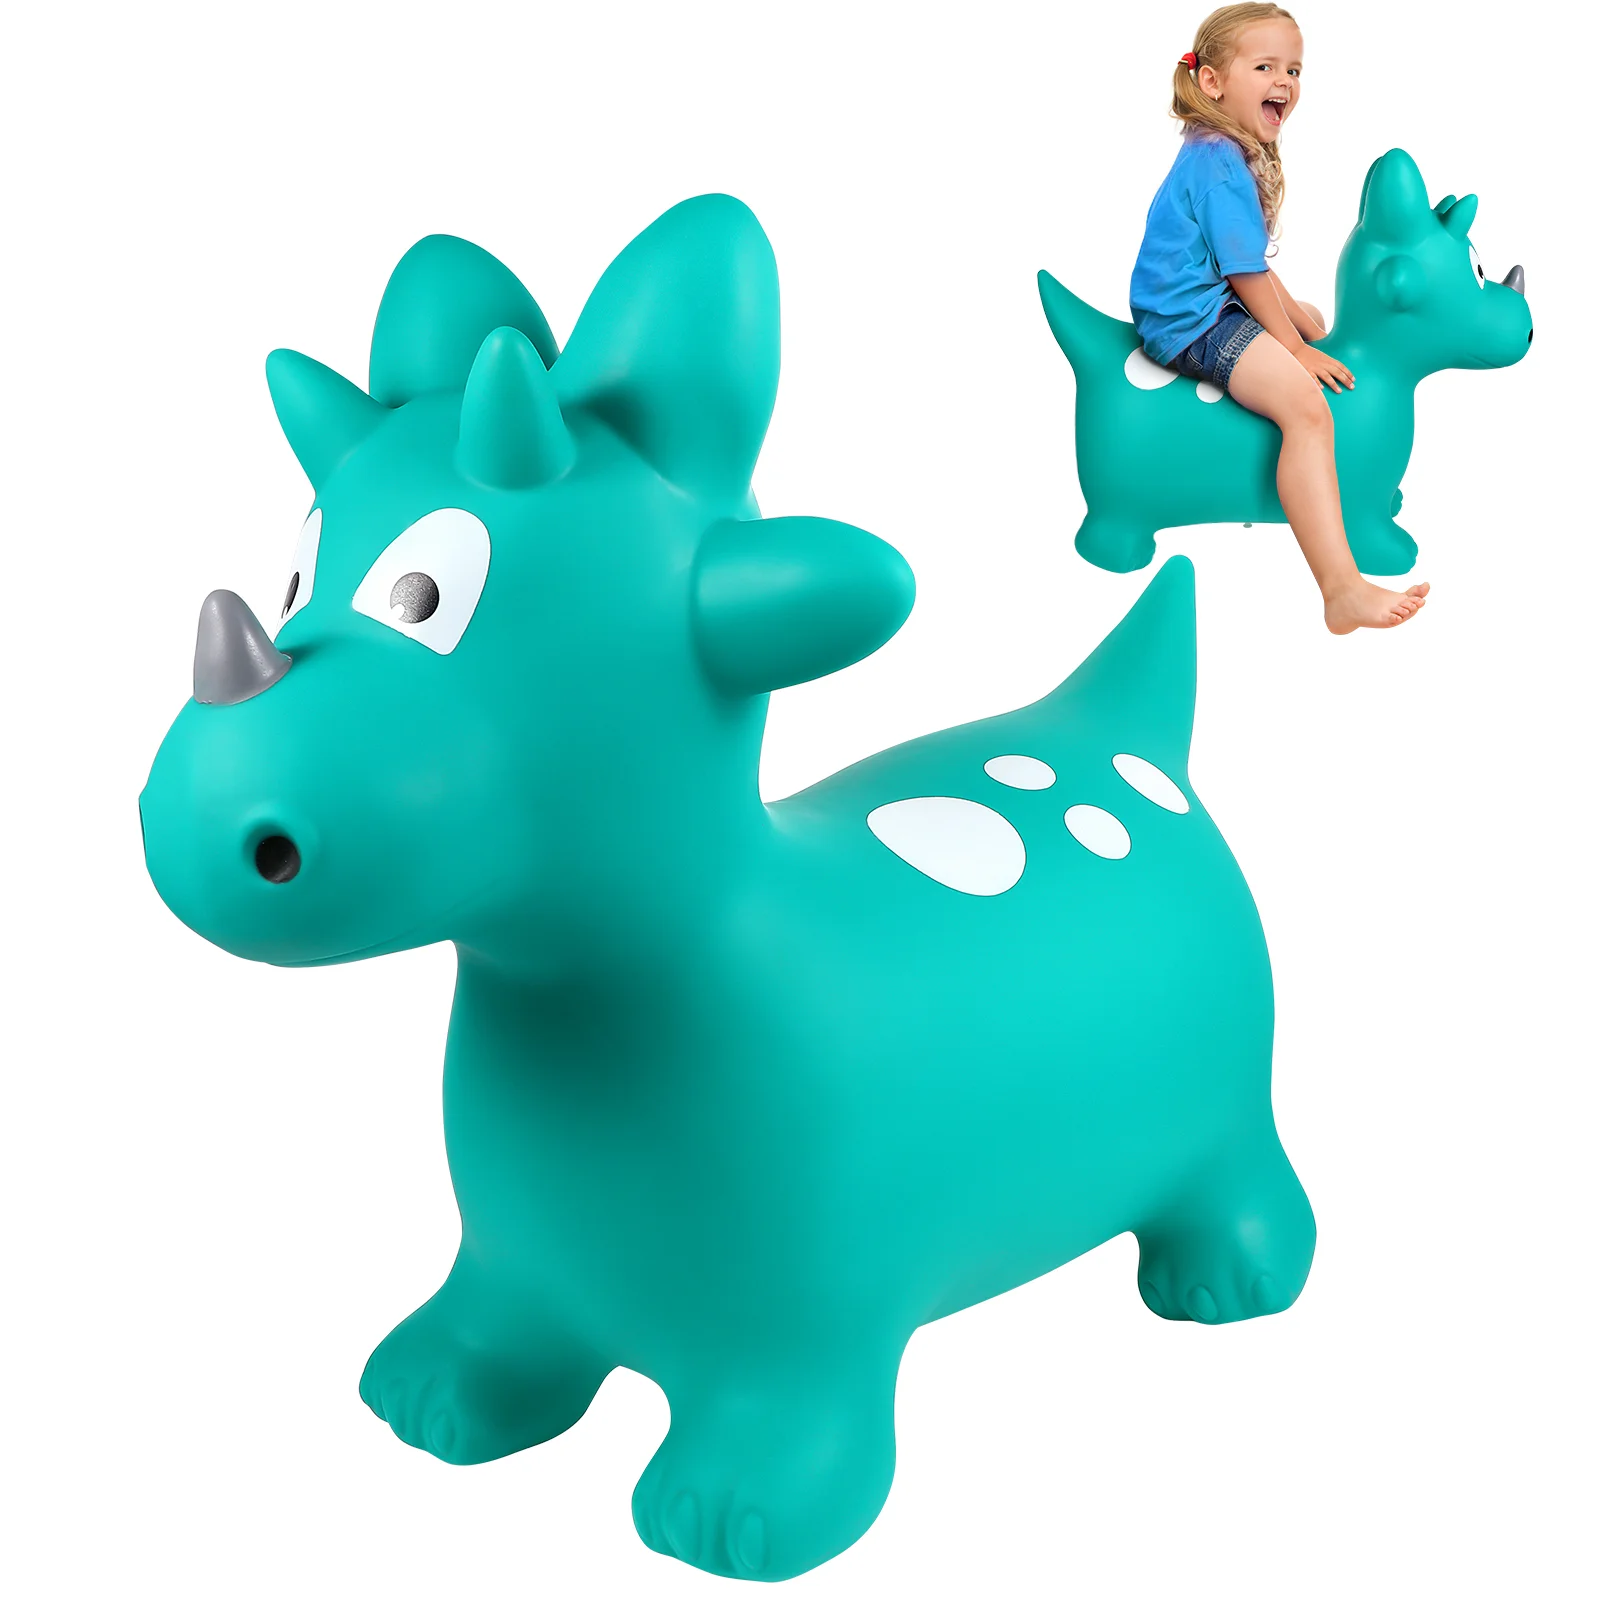 Ll kid toy inflatable bouncy horse jumping dinosaur kids elasticity pvc children hopper thumb200